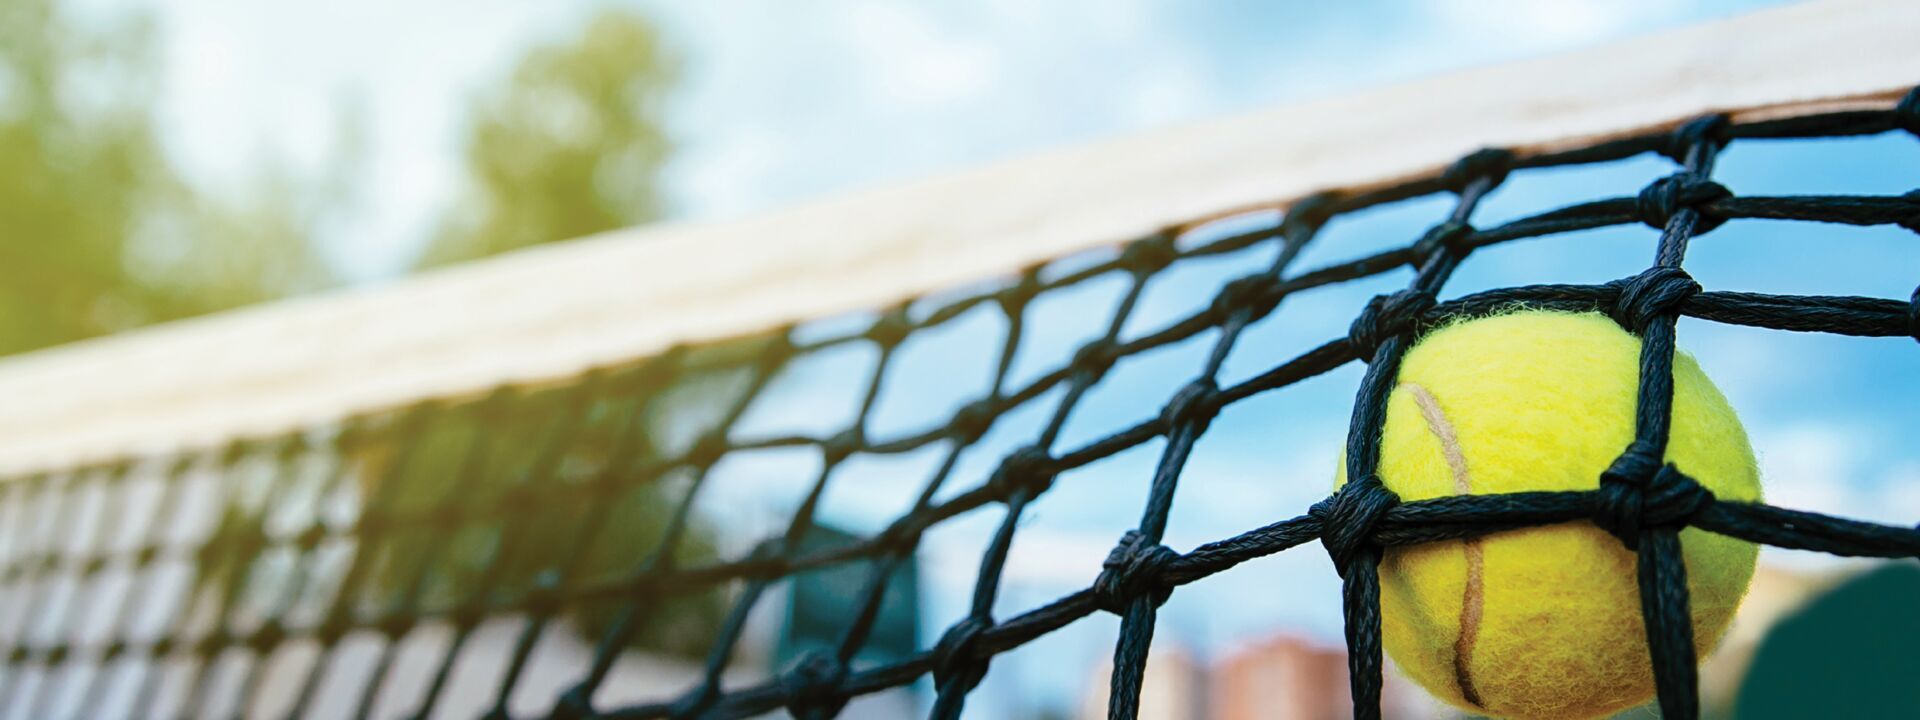 The tennis ball hits the net